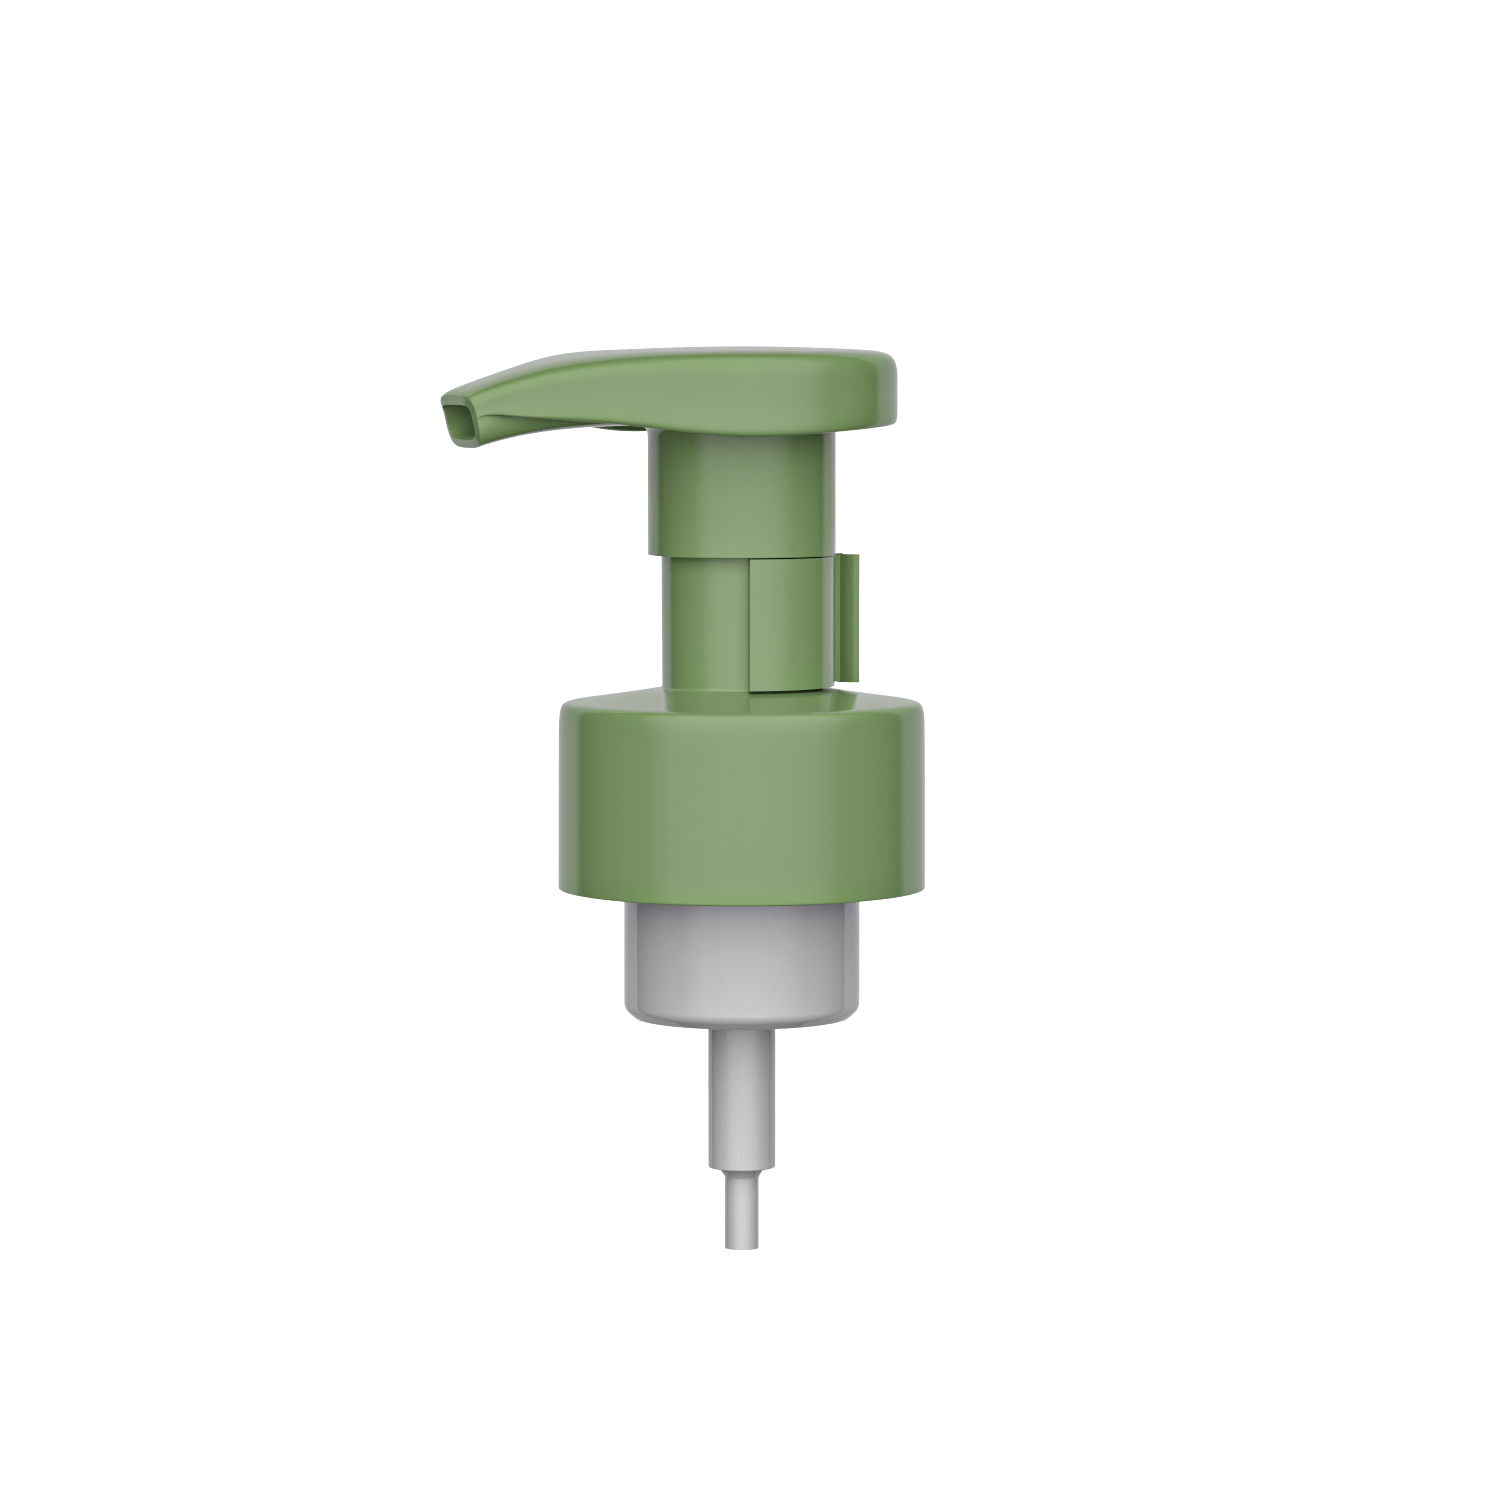 HD-502C 43/410 ハンドソープ シャンプー シャワー 洗浄 0.8ml/T 泡ポンプ